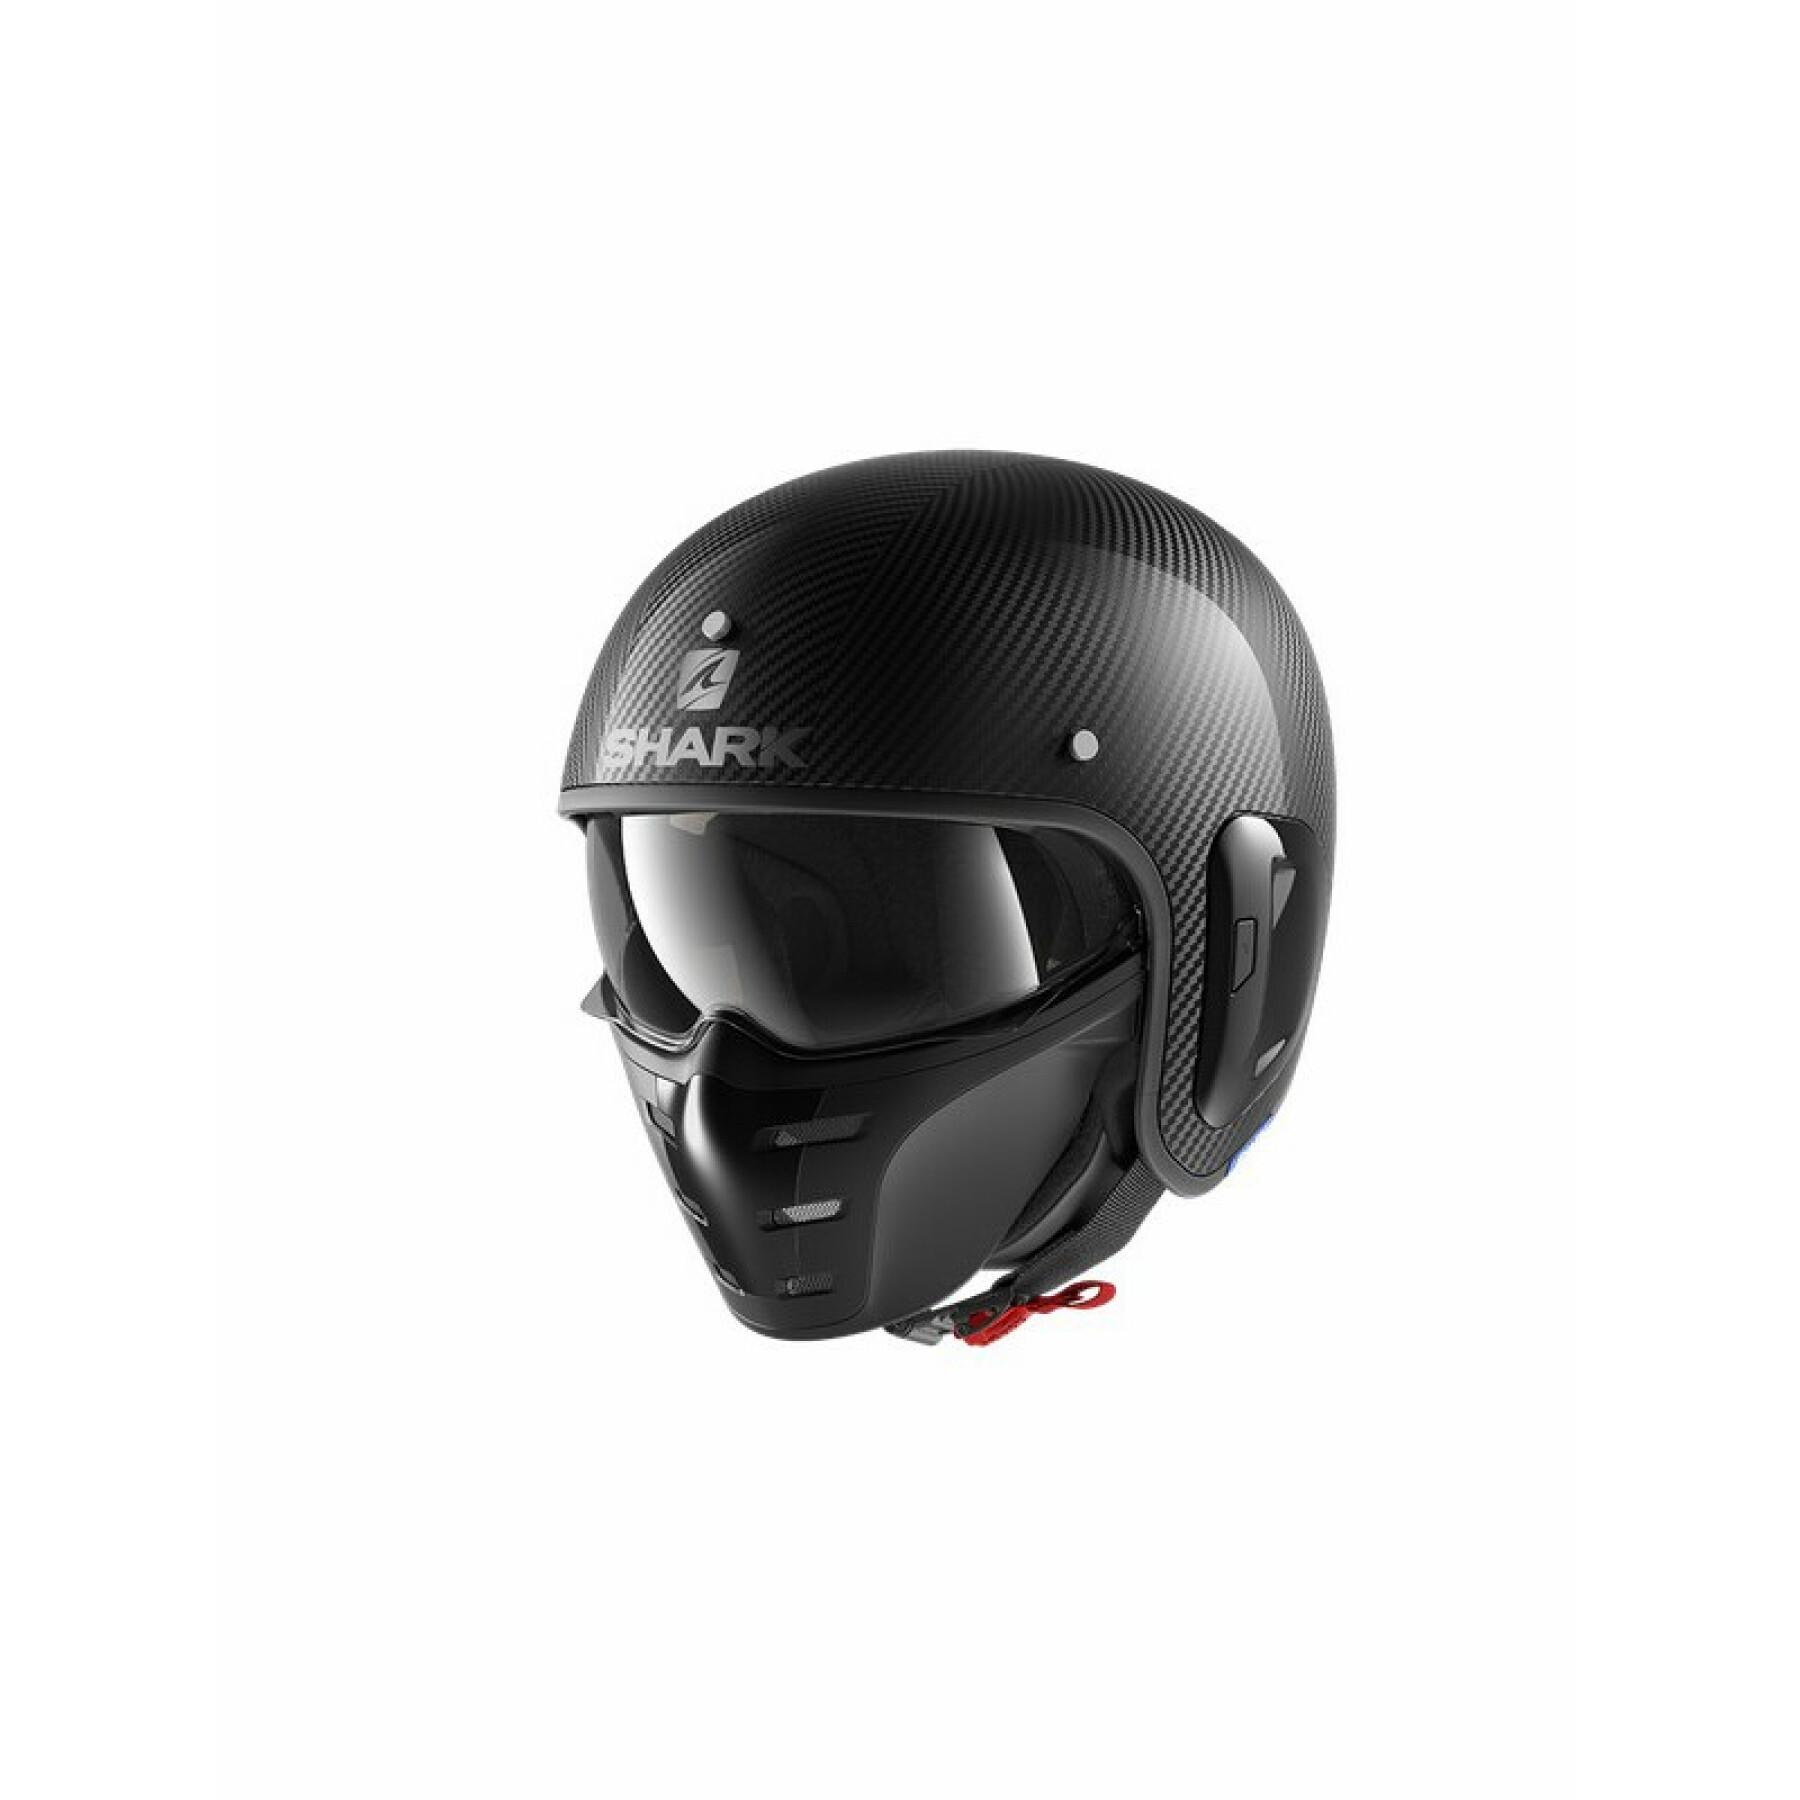 Jet motorcycle helmet Shark s-drak 2 carbon skin